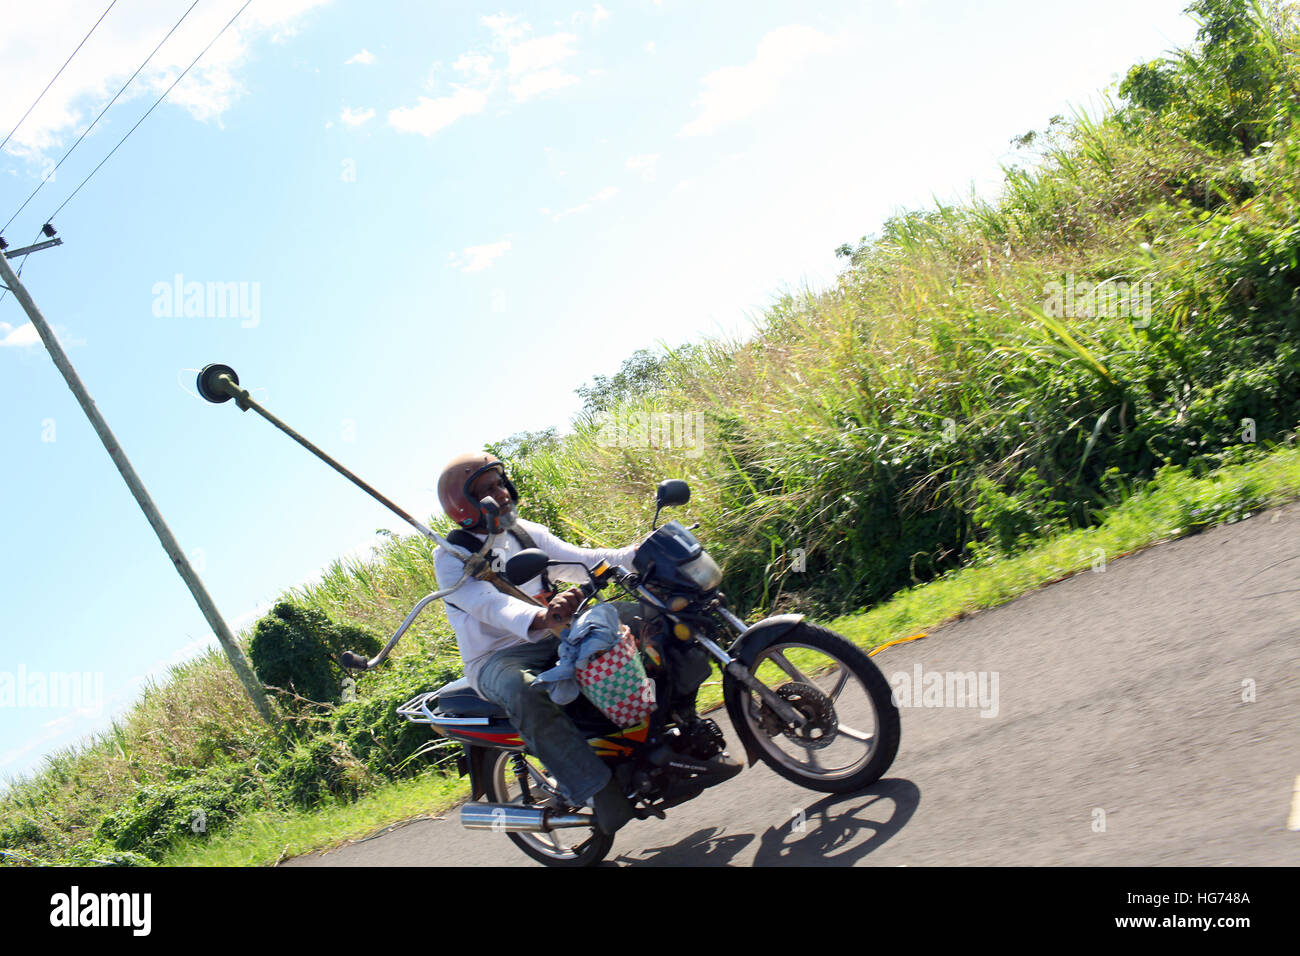 Man travels with garden strimmer on motor bike Stock Photo